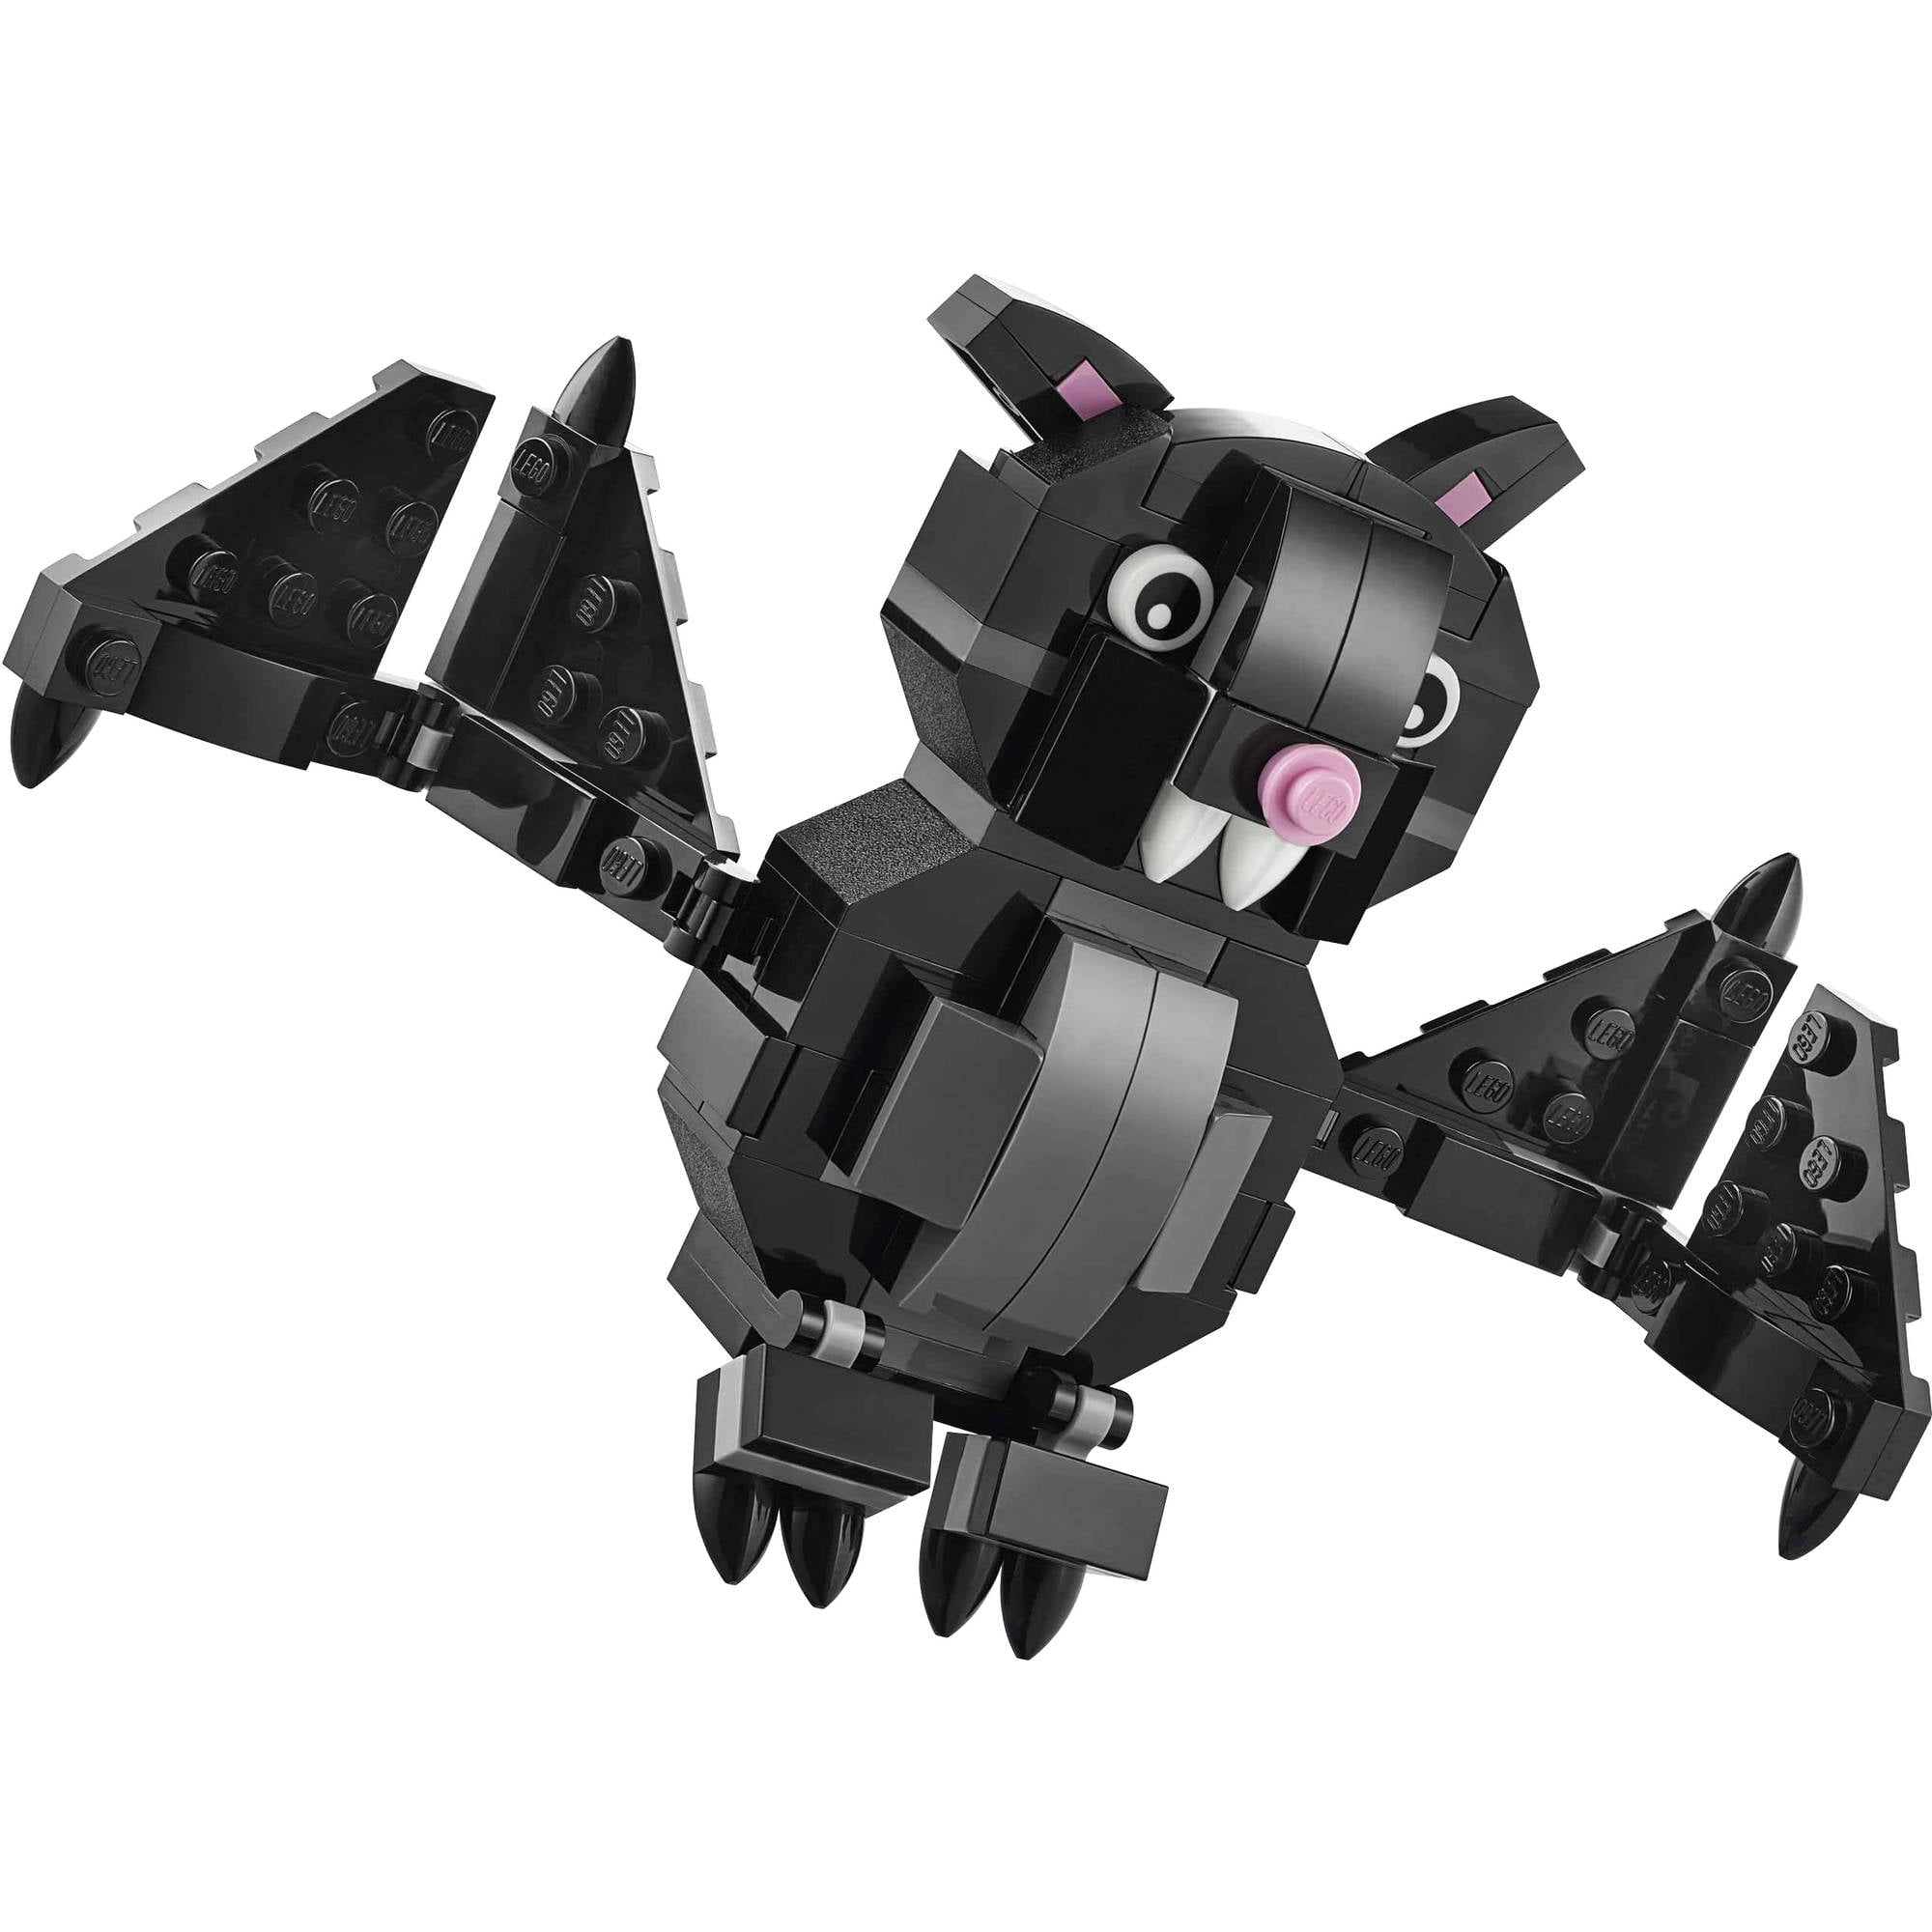 LEGO Halloween Bat Building Set